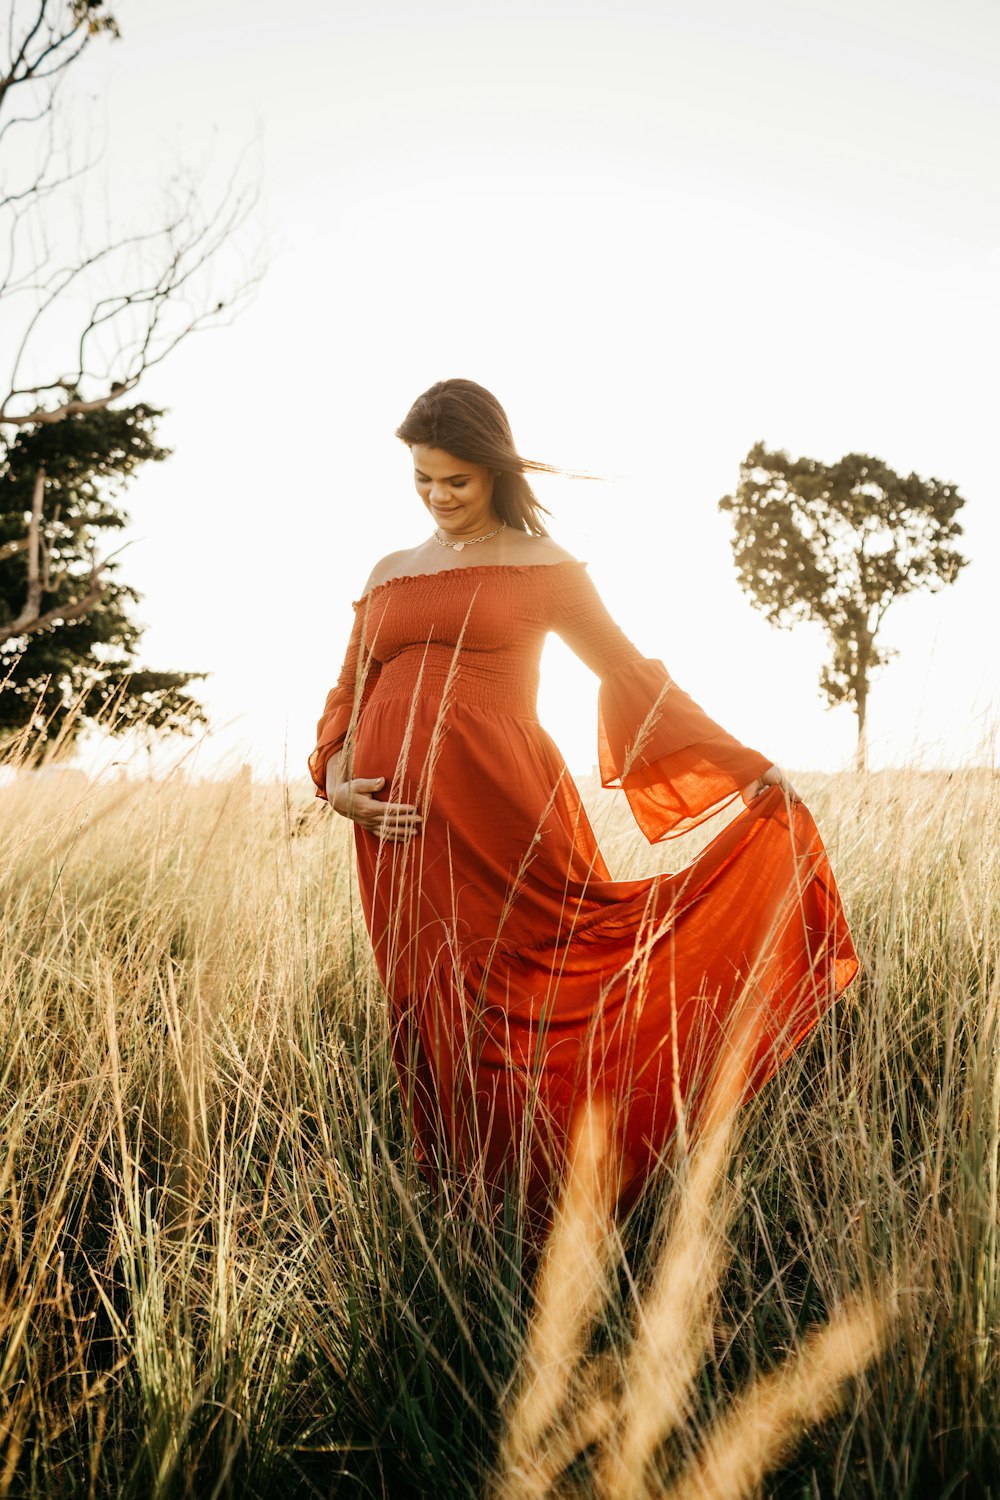 Frau in orangefarbenem Kleid, die tagsüber auf dem Rasen steht